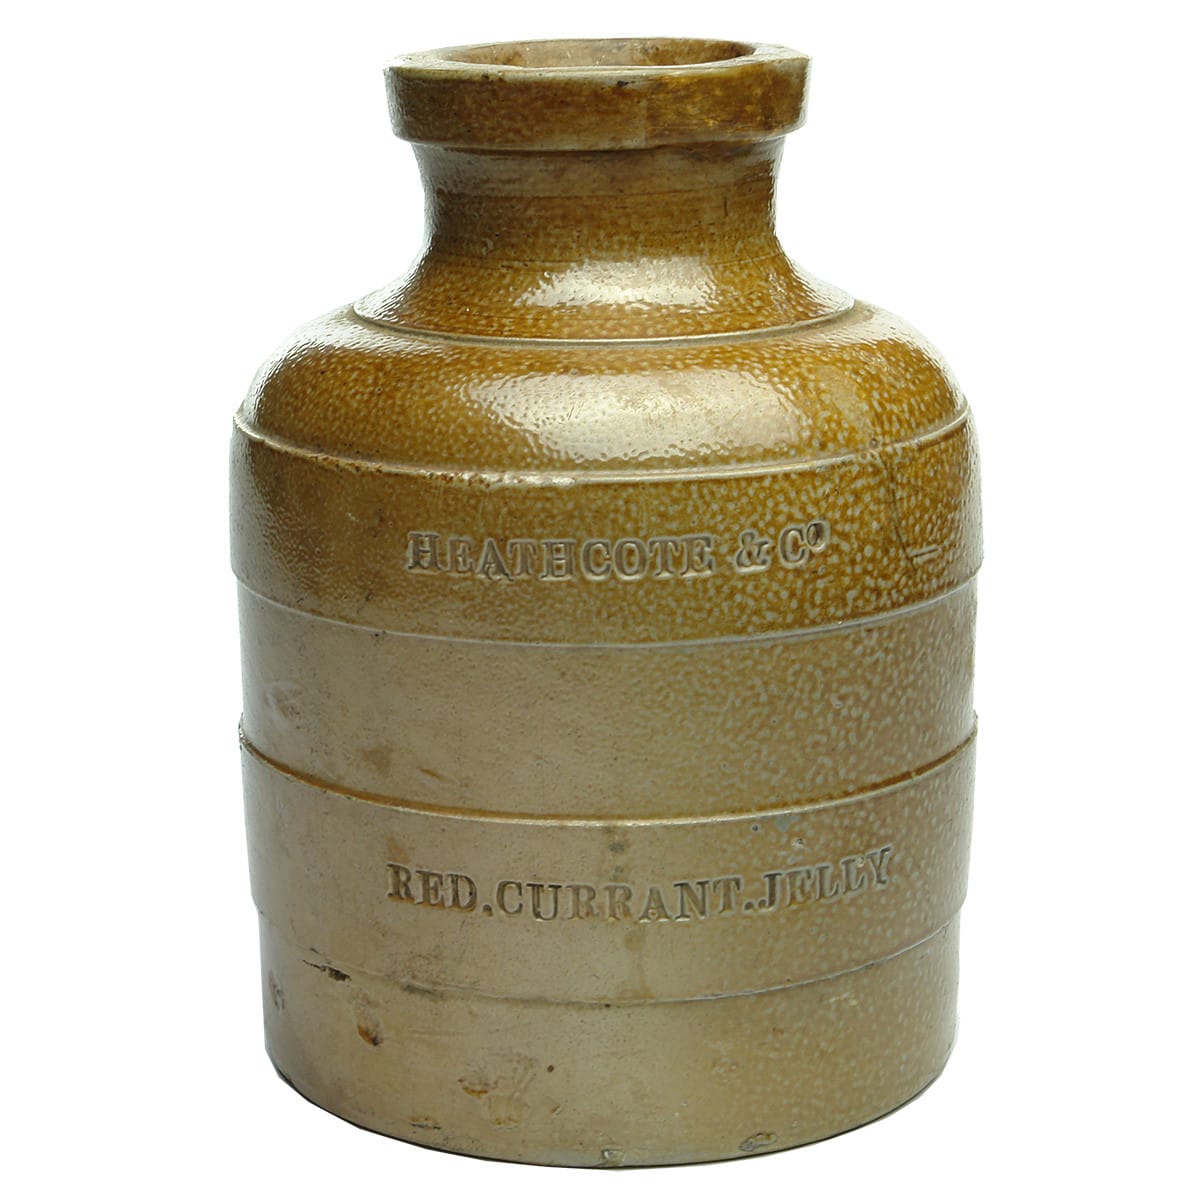 Stoneware Jam Jar. Heathcote & Co Red Currant Jelly. 2 Pound. Salt Glaze.